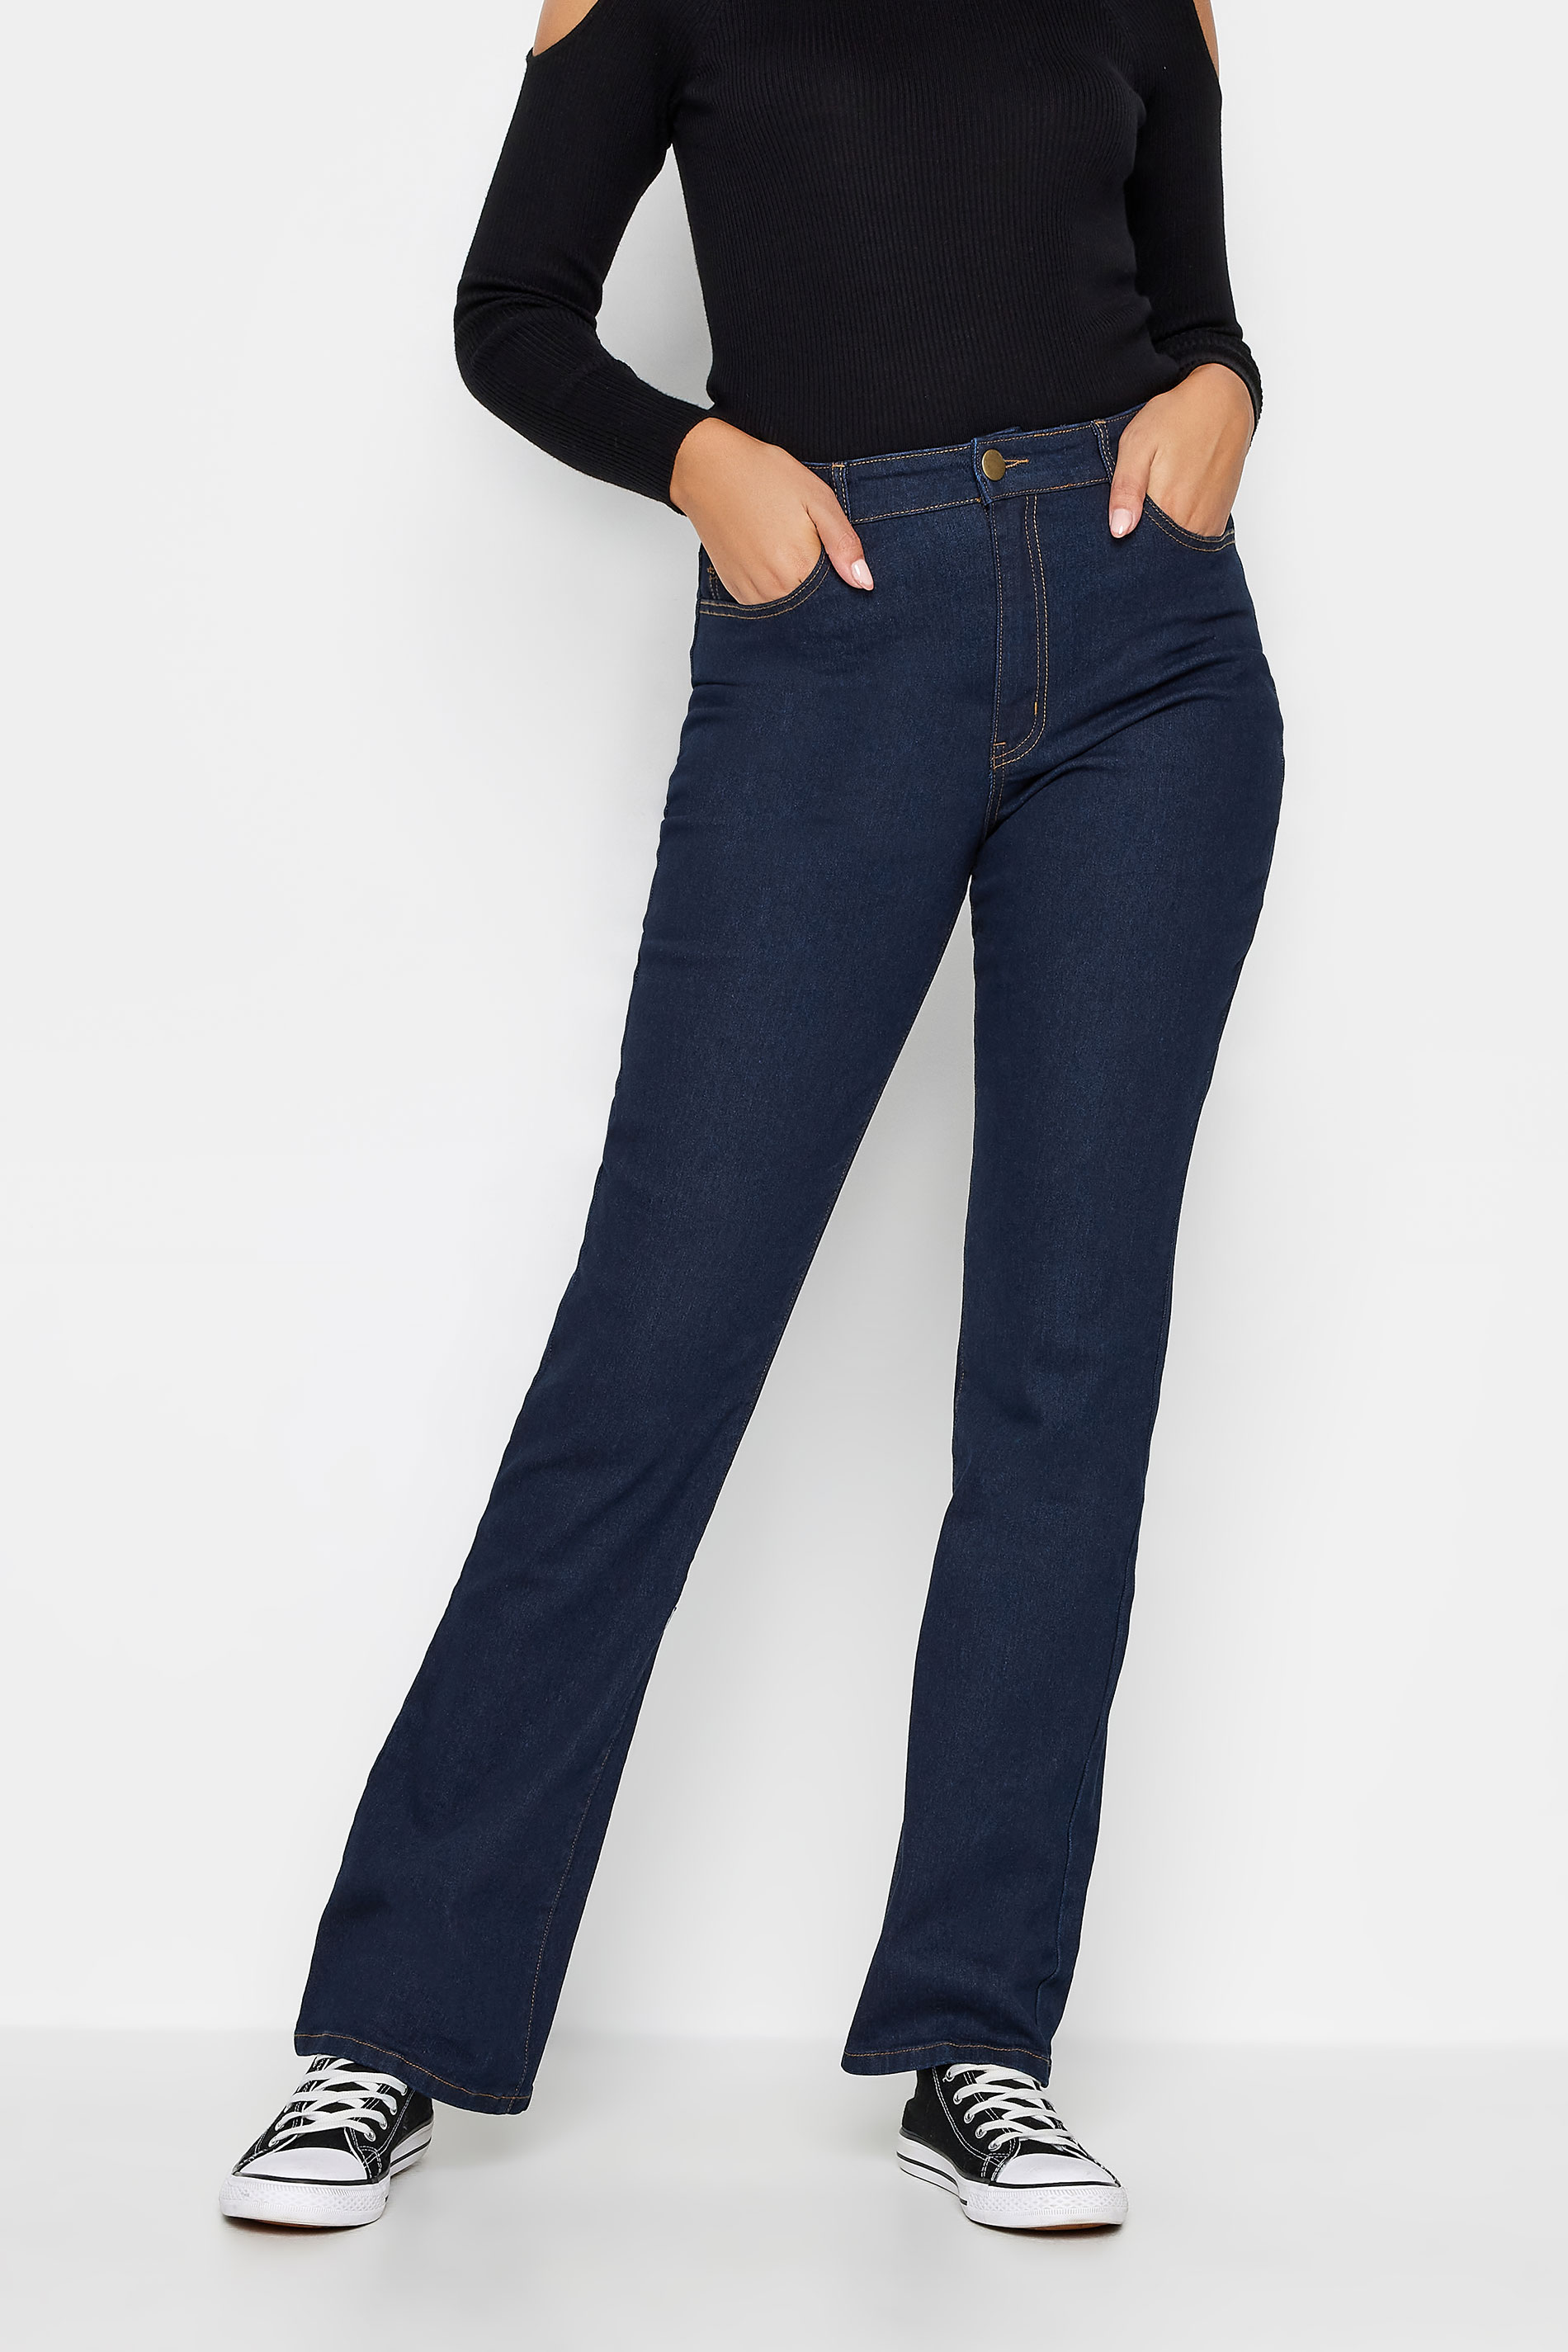 LTS Tall Indigo Blue Denim Bootcut Jeans | Long Tall Sally 2